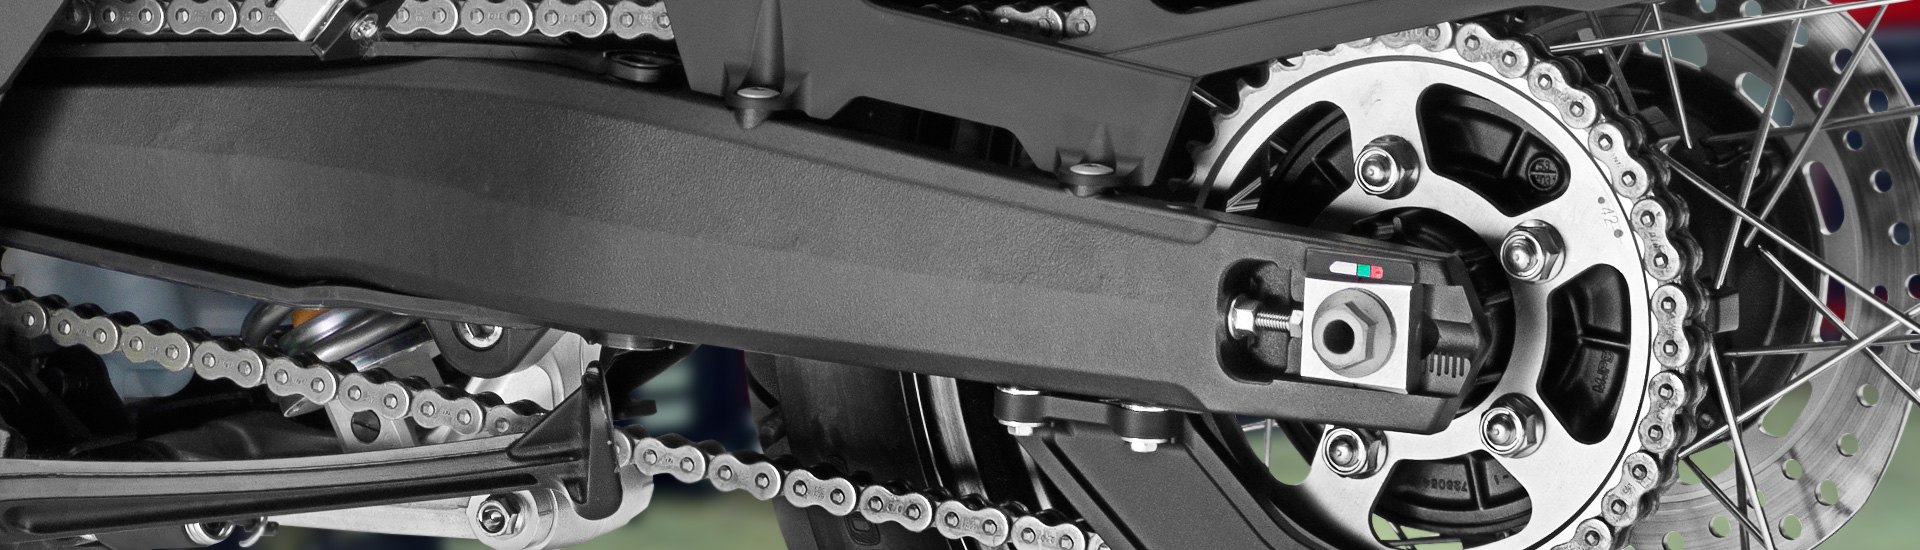 Universal Motorcycle Drivetrain & Transmission Parts